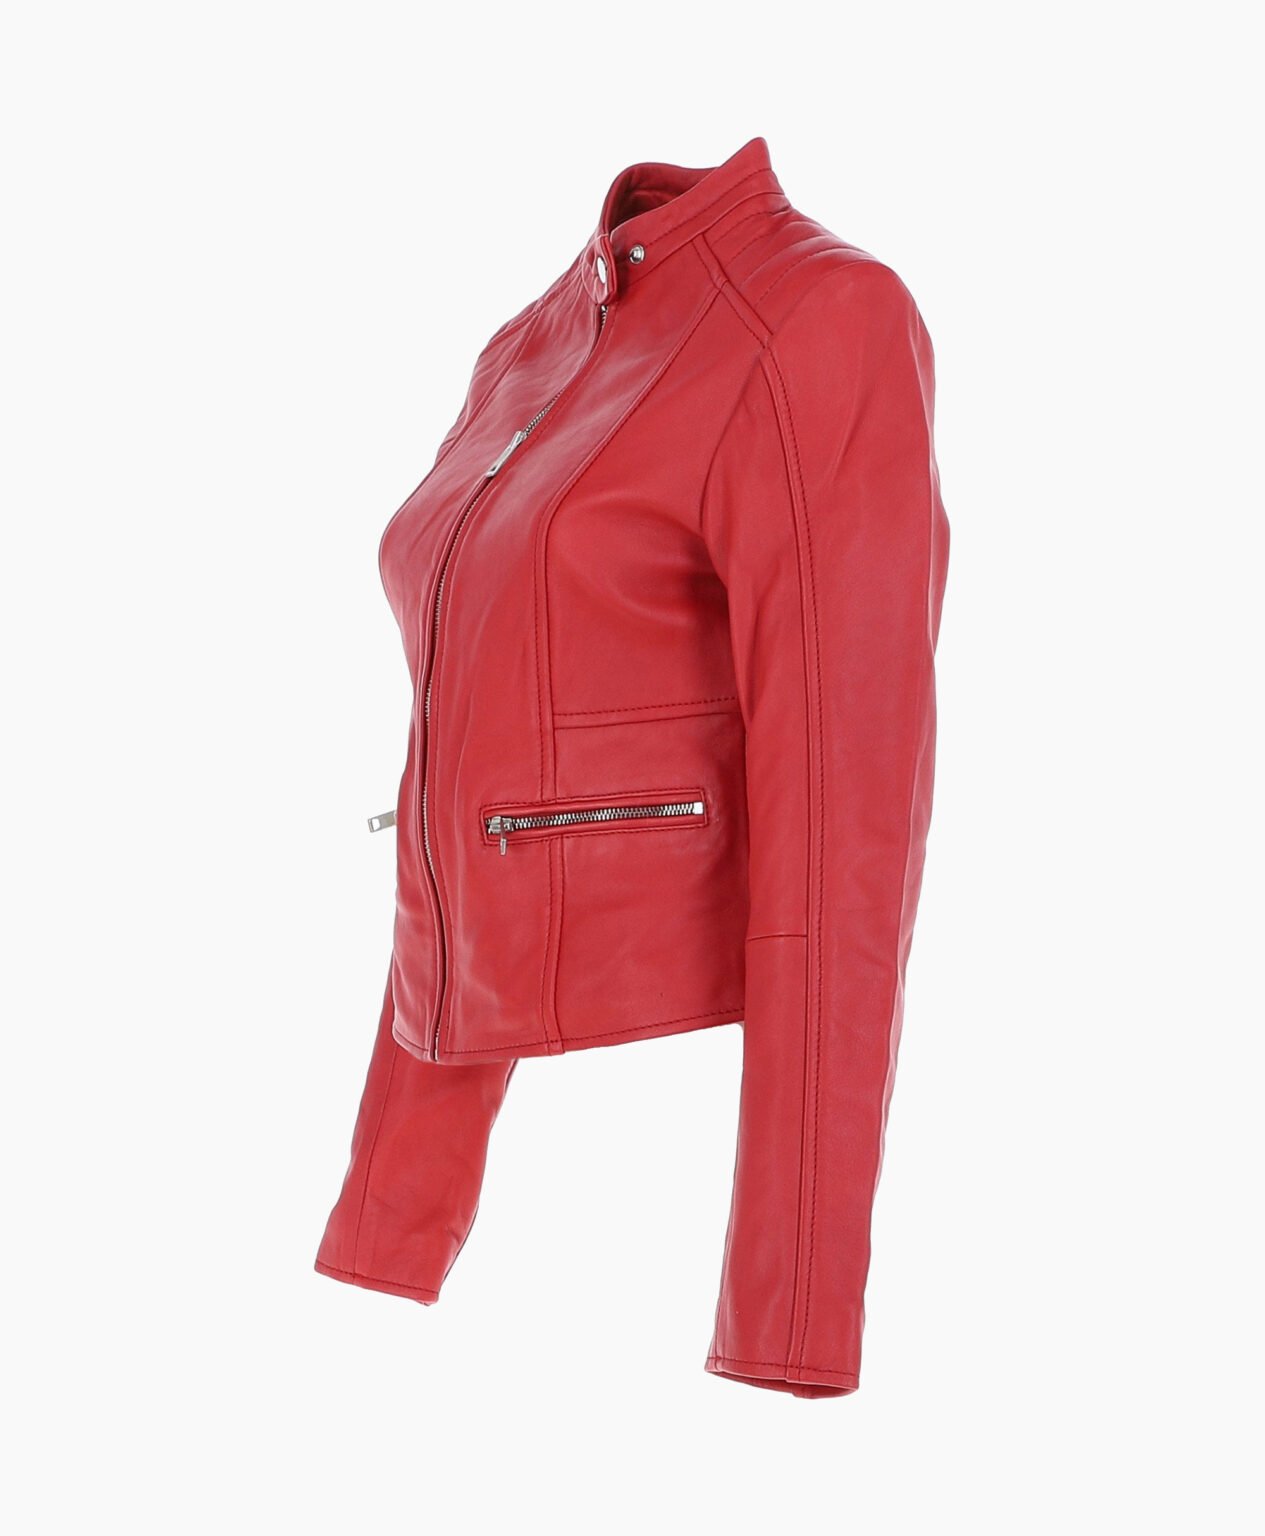 vogue-jacket-leather-biker-jacket-red-ontario-image201